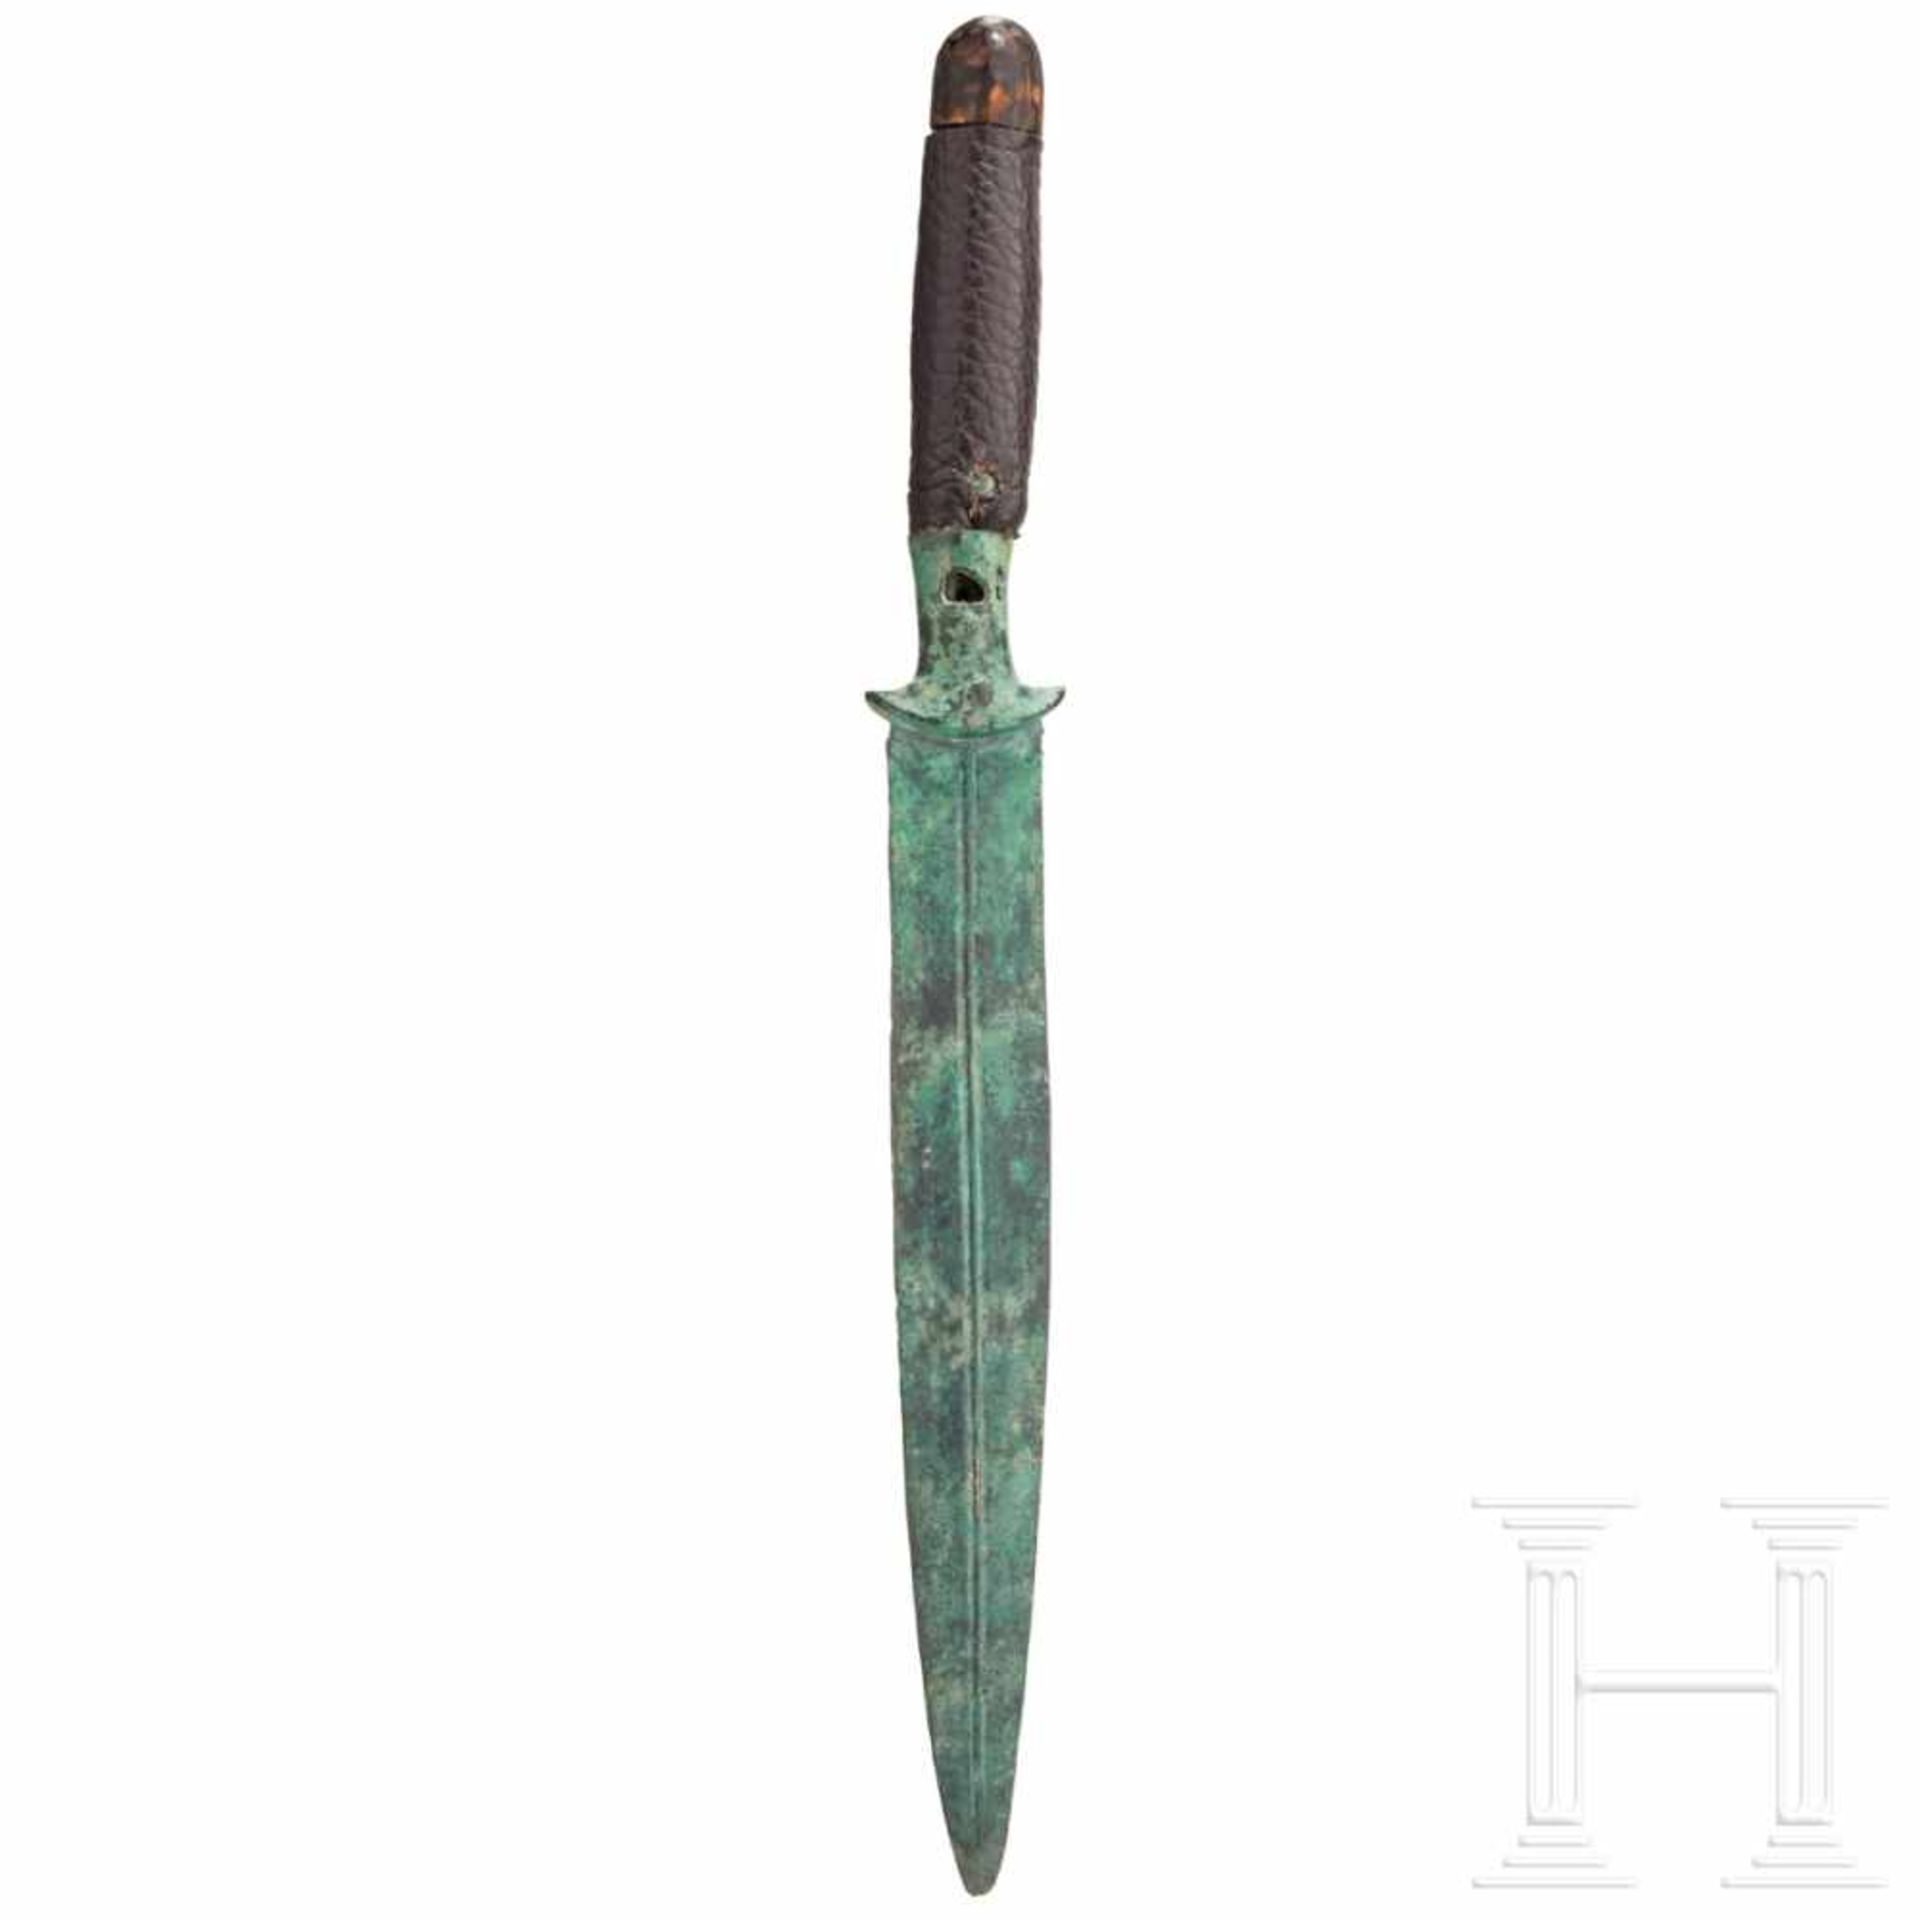 A Luristan bronze dagger, 2nd half of the 3rd millennium B.C.Excellently preserved bronze dagger